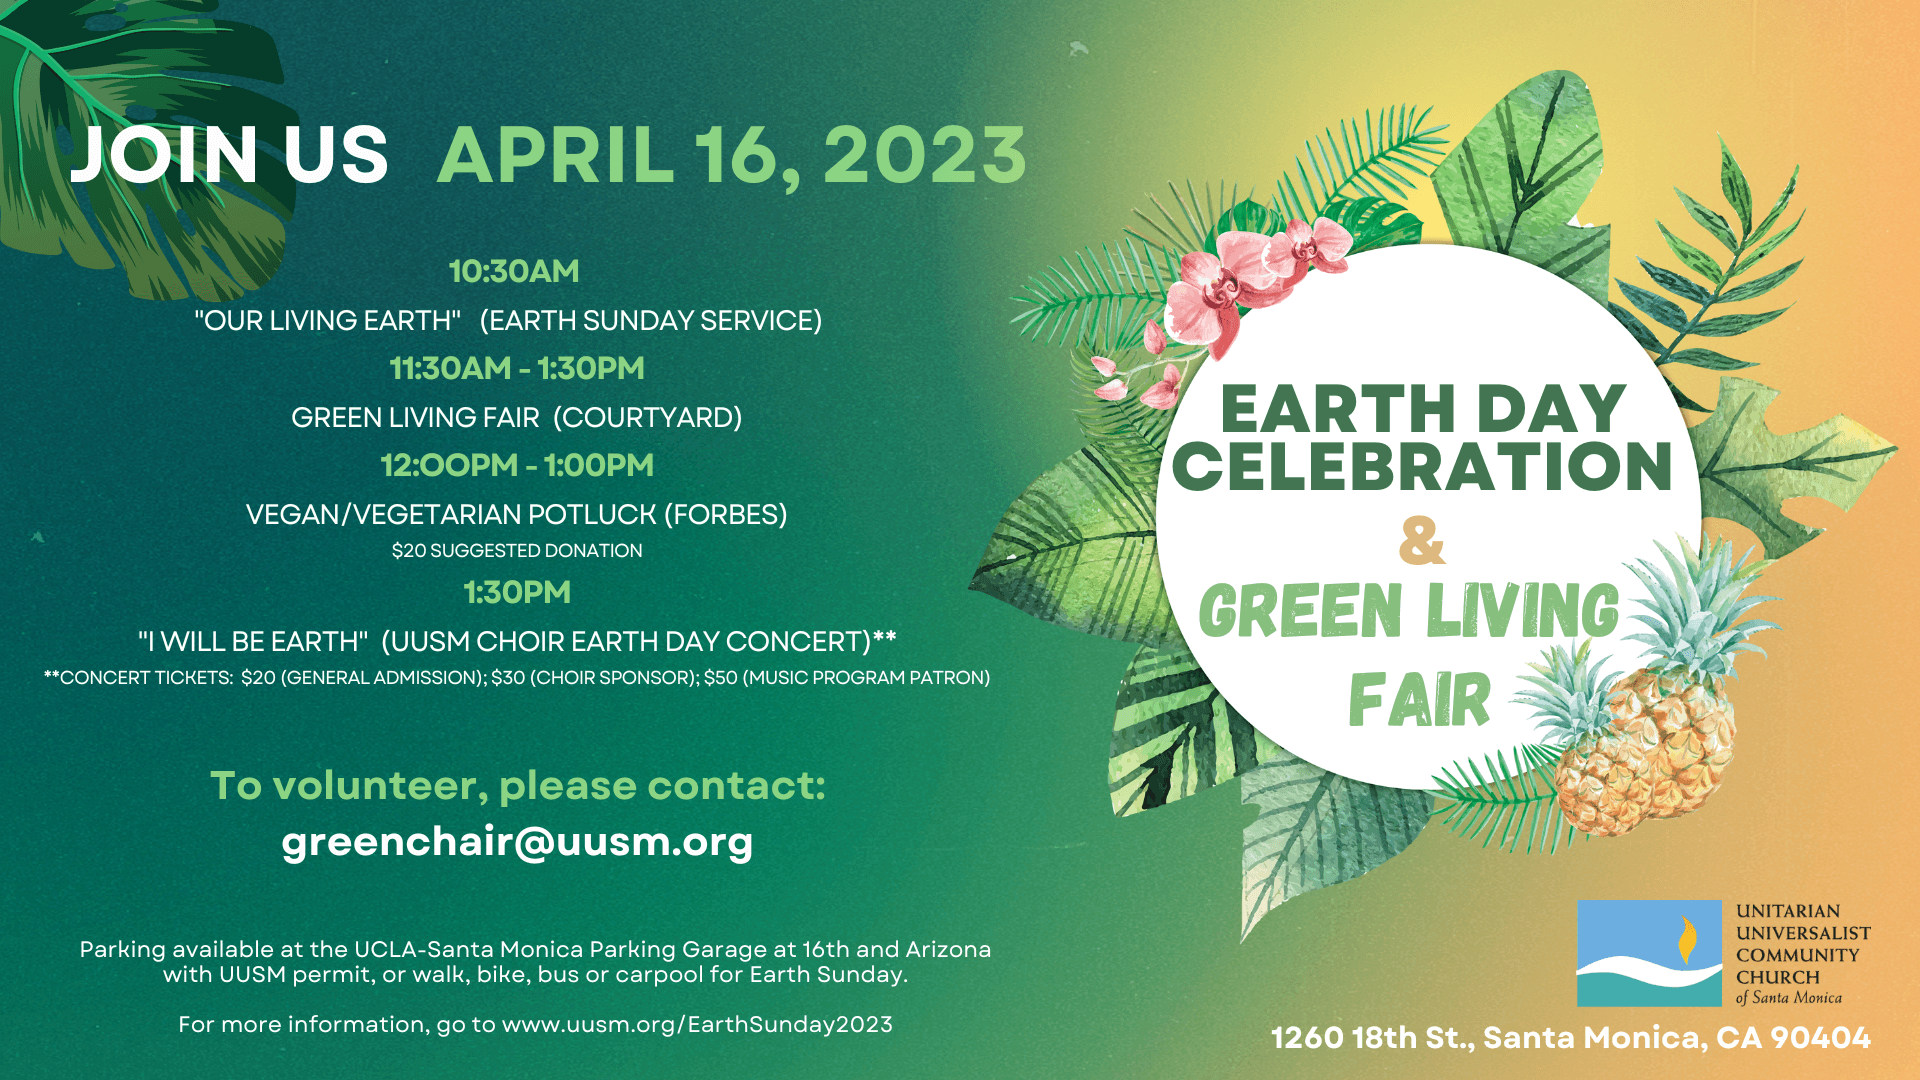 Earth Day Celebration Green Living Fair UUSM Choir